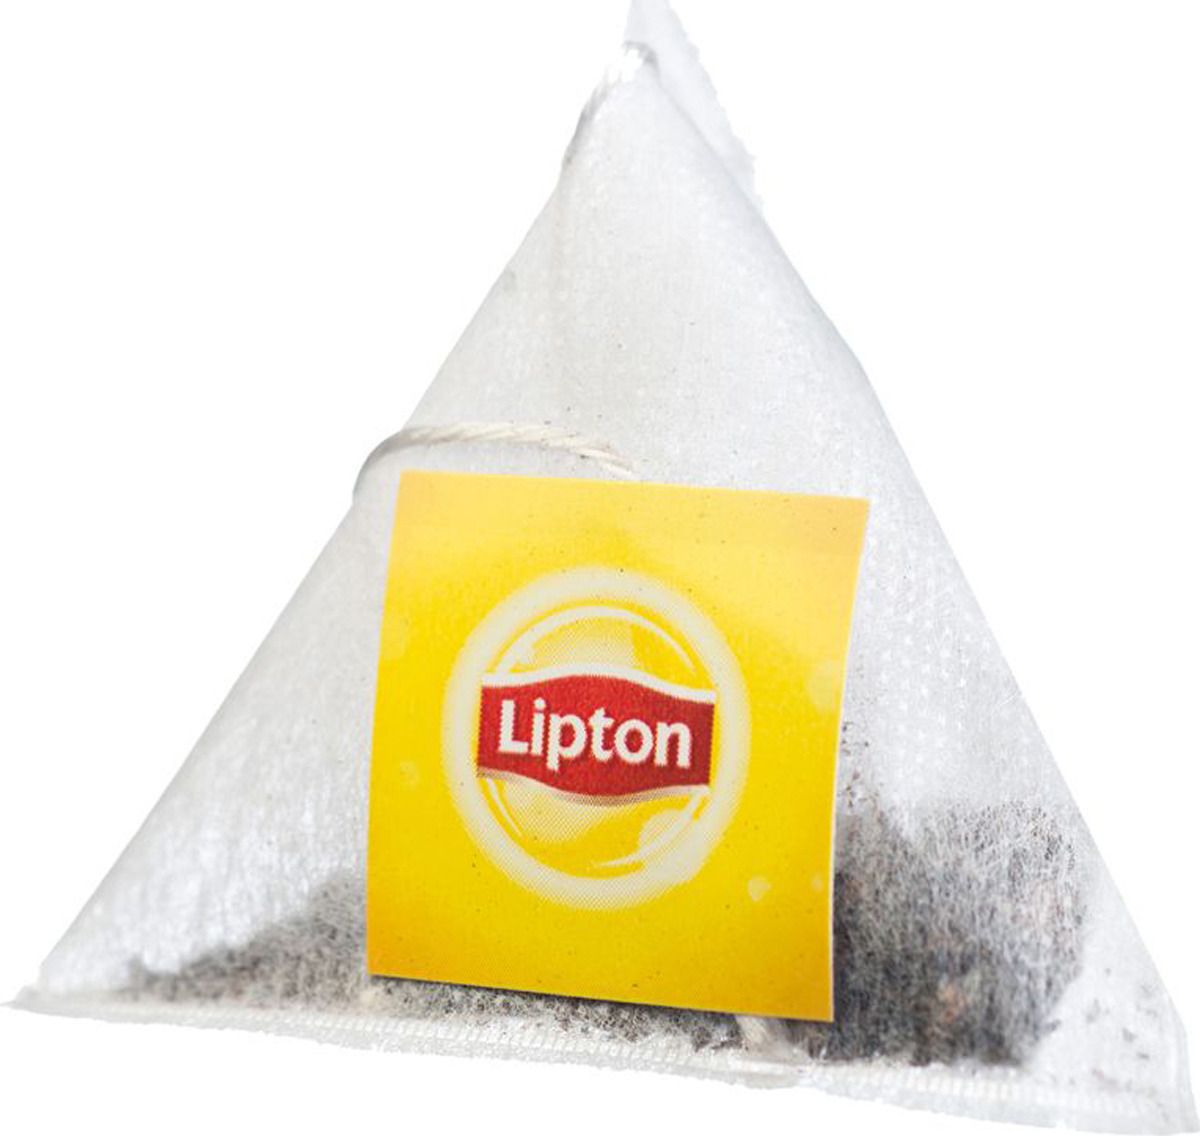 Lipton Almond plum     , 20 